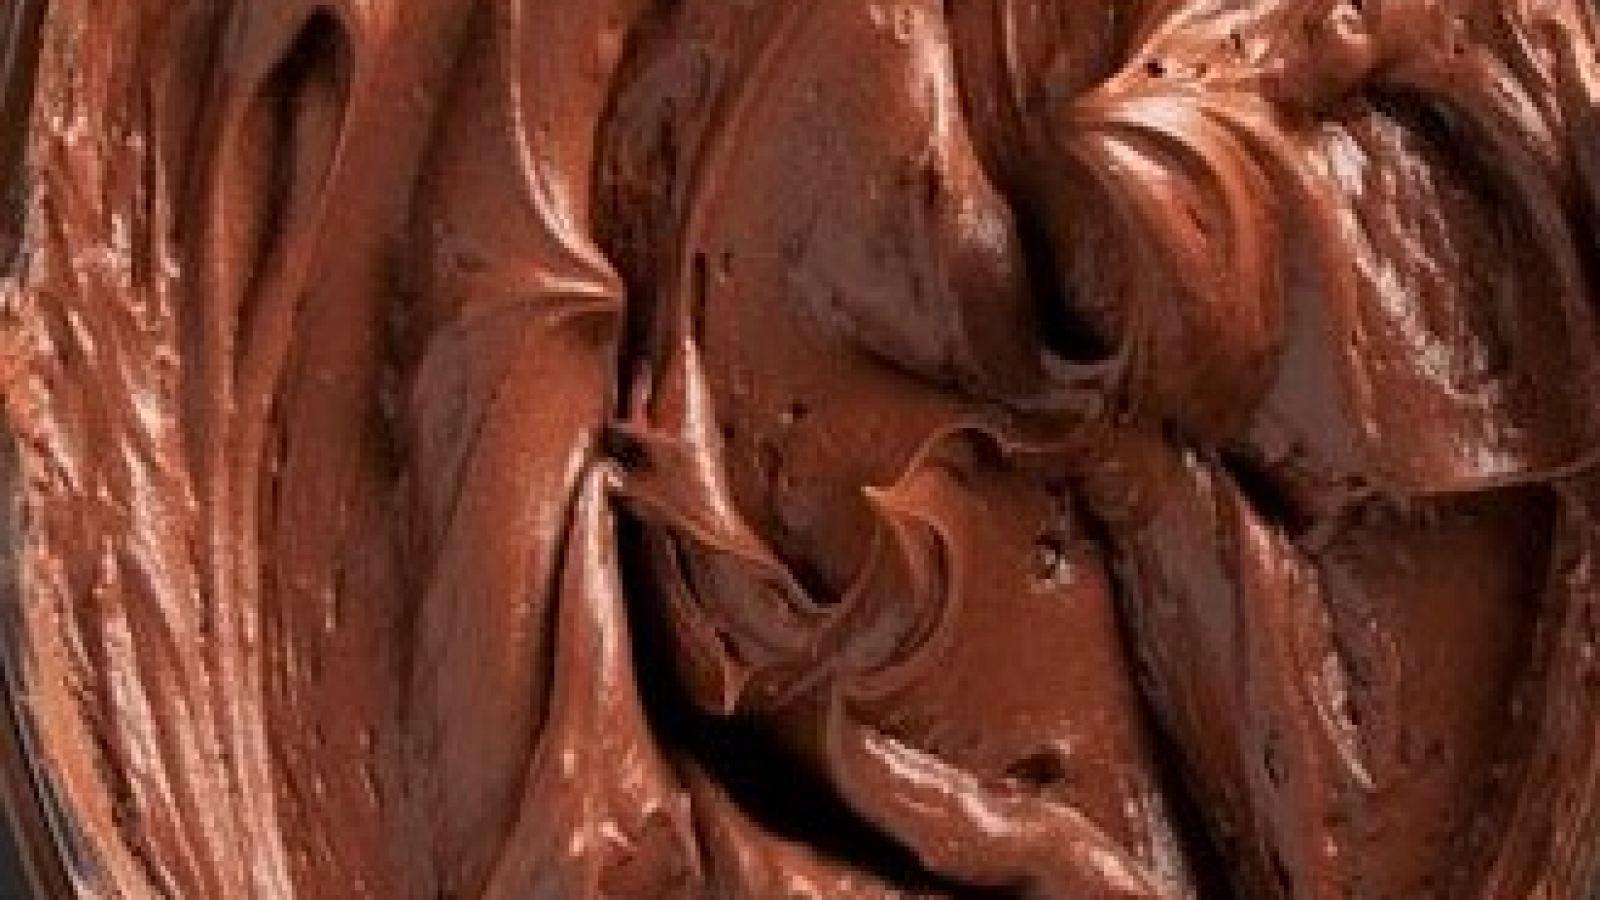 Chocolate icing